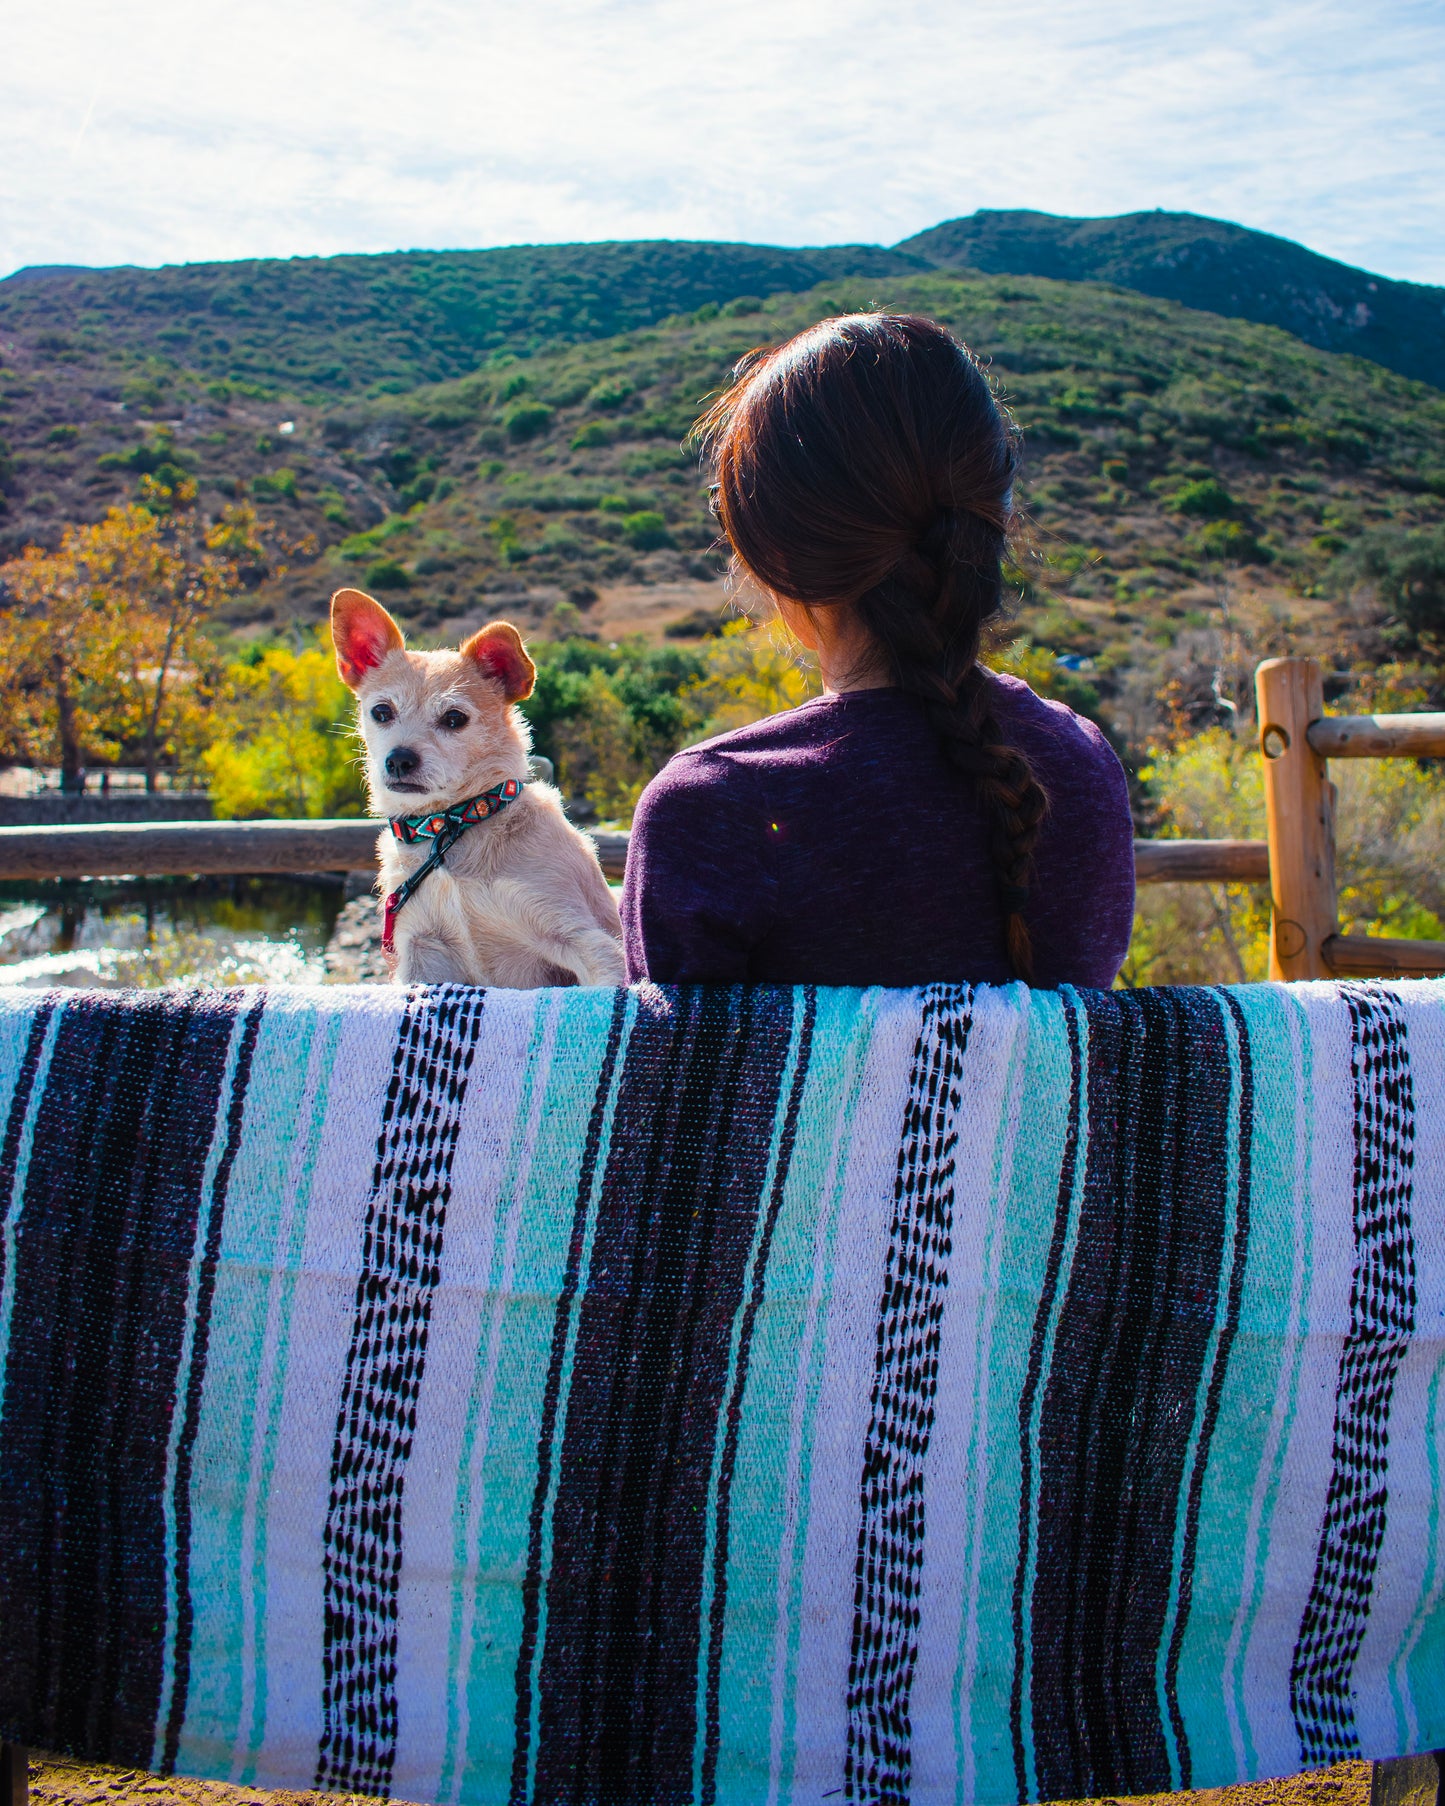 Mexican Blanket, Seafoam - for Yoga, Camping, Picnics, Travel, Beach